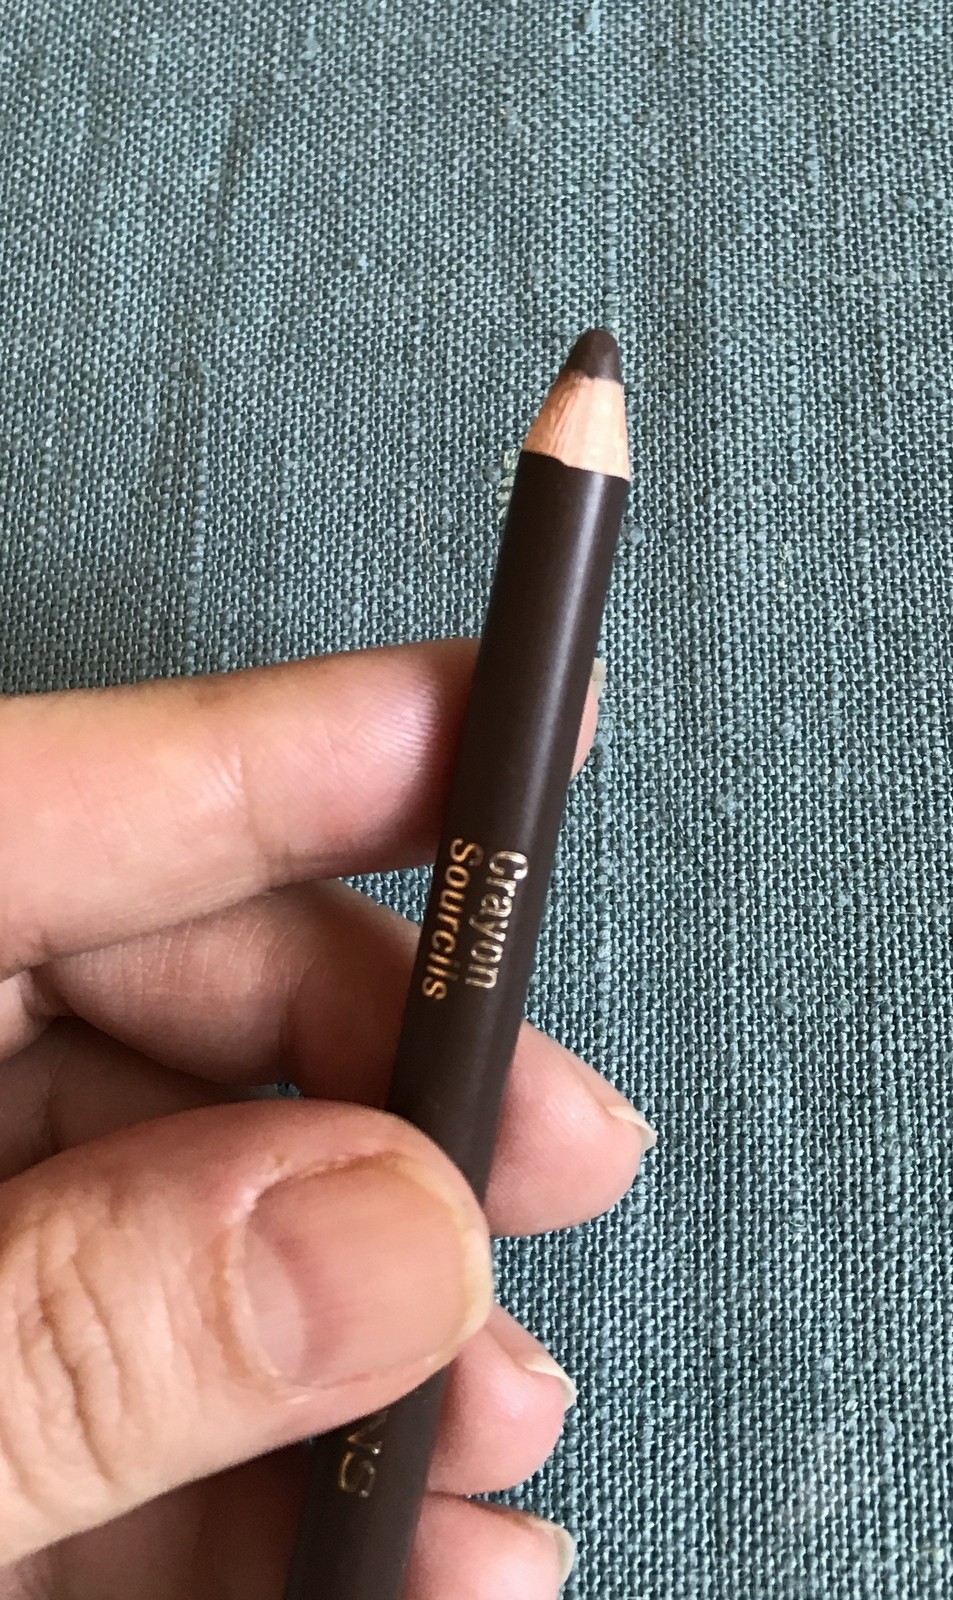 Clarins карандаш для бровей 03 soft blonde